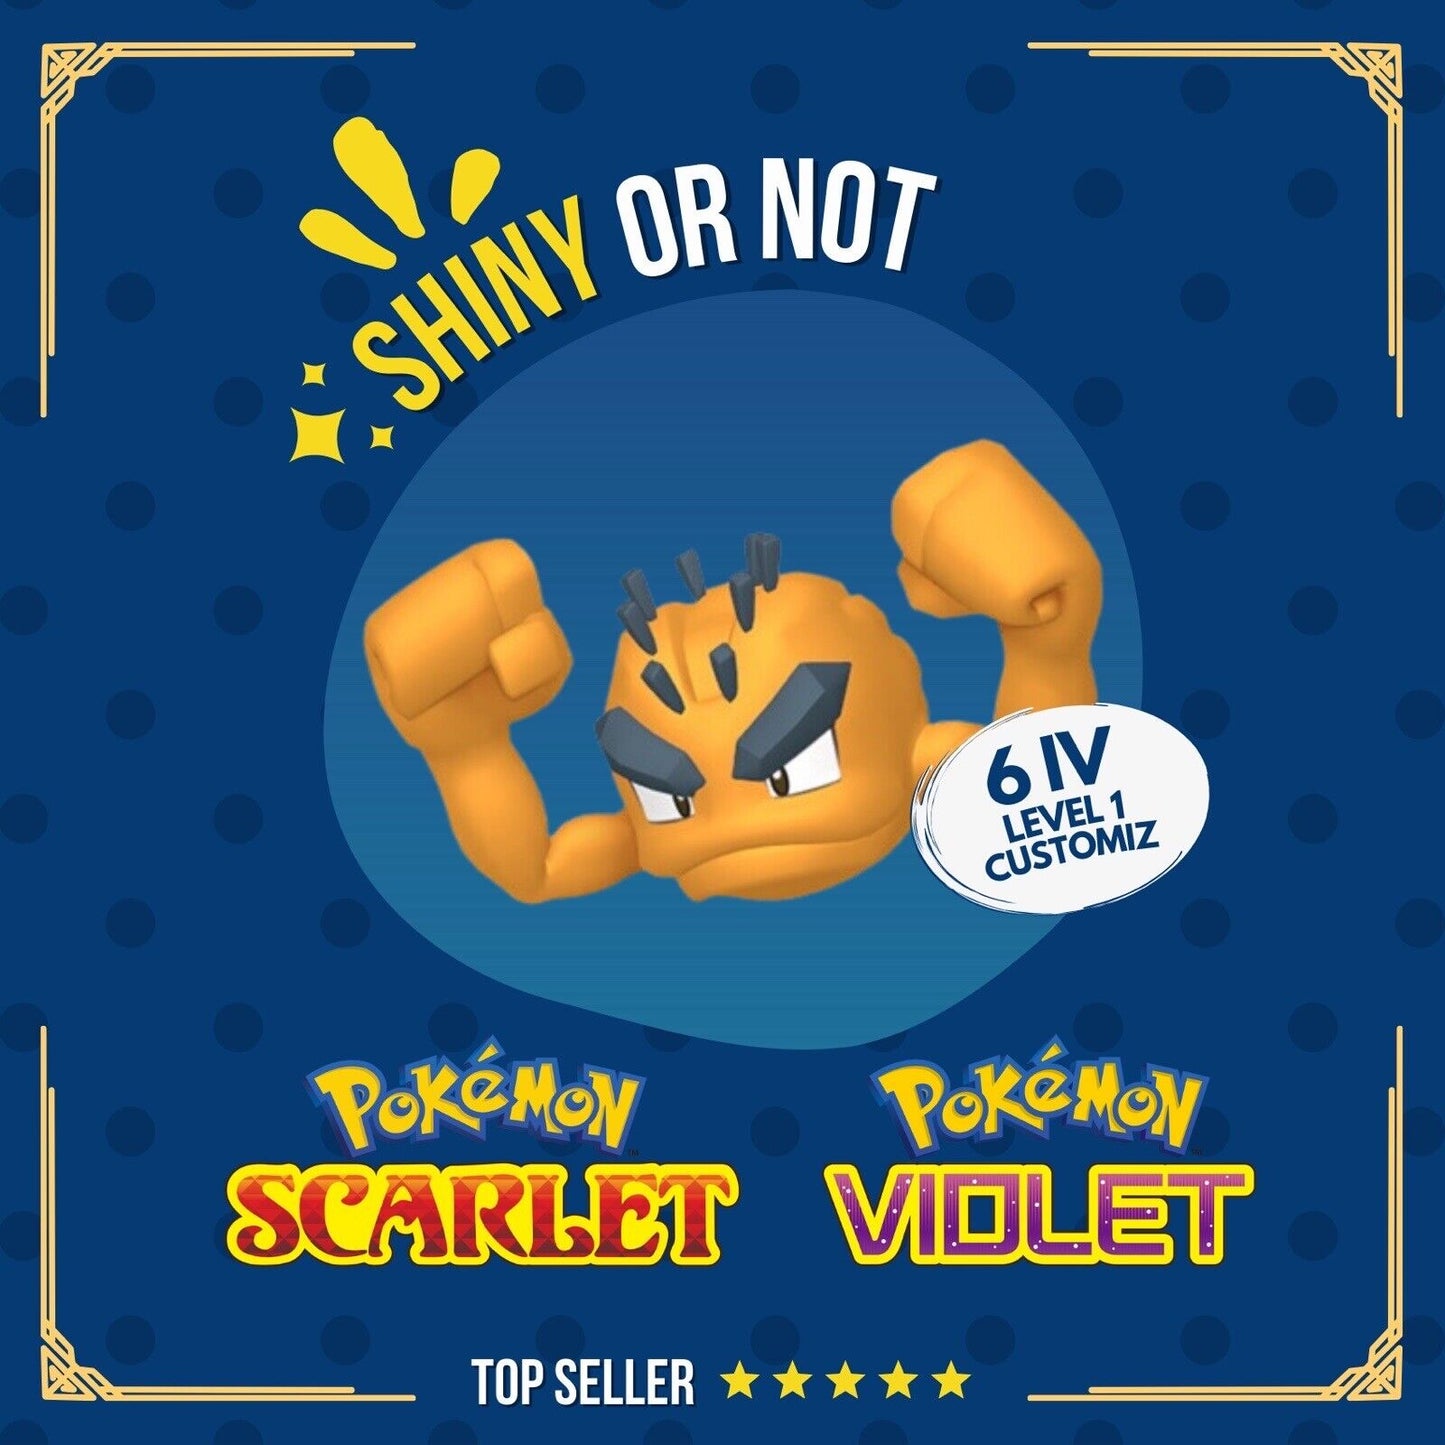 Geodude Alolan Shiny or Non ✨ 6 IV Customizable Level OT Pokémon Scarlet Violet by Shiny Living Dex | Shiny Living Dex